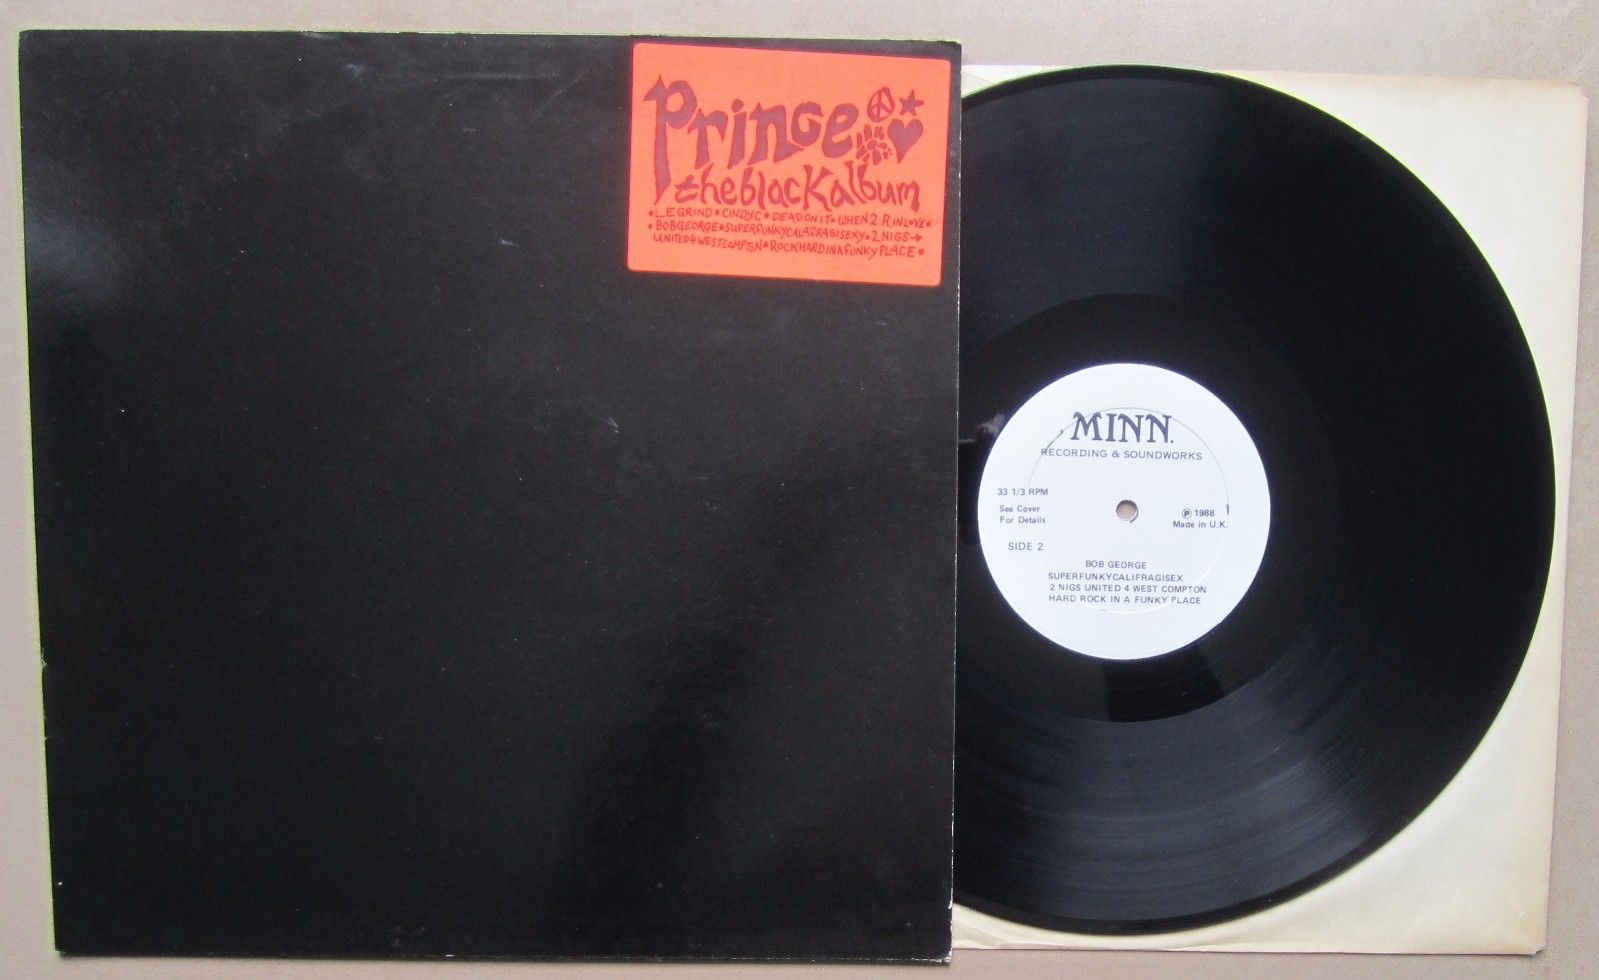 popsike.com - PRINCE. THE BLACK ALBUM. UK VINYL LP. 1988. MINN RECORDING.  ORANGE STICKER. N/M - auction details